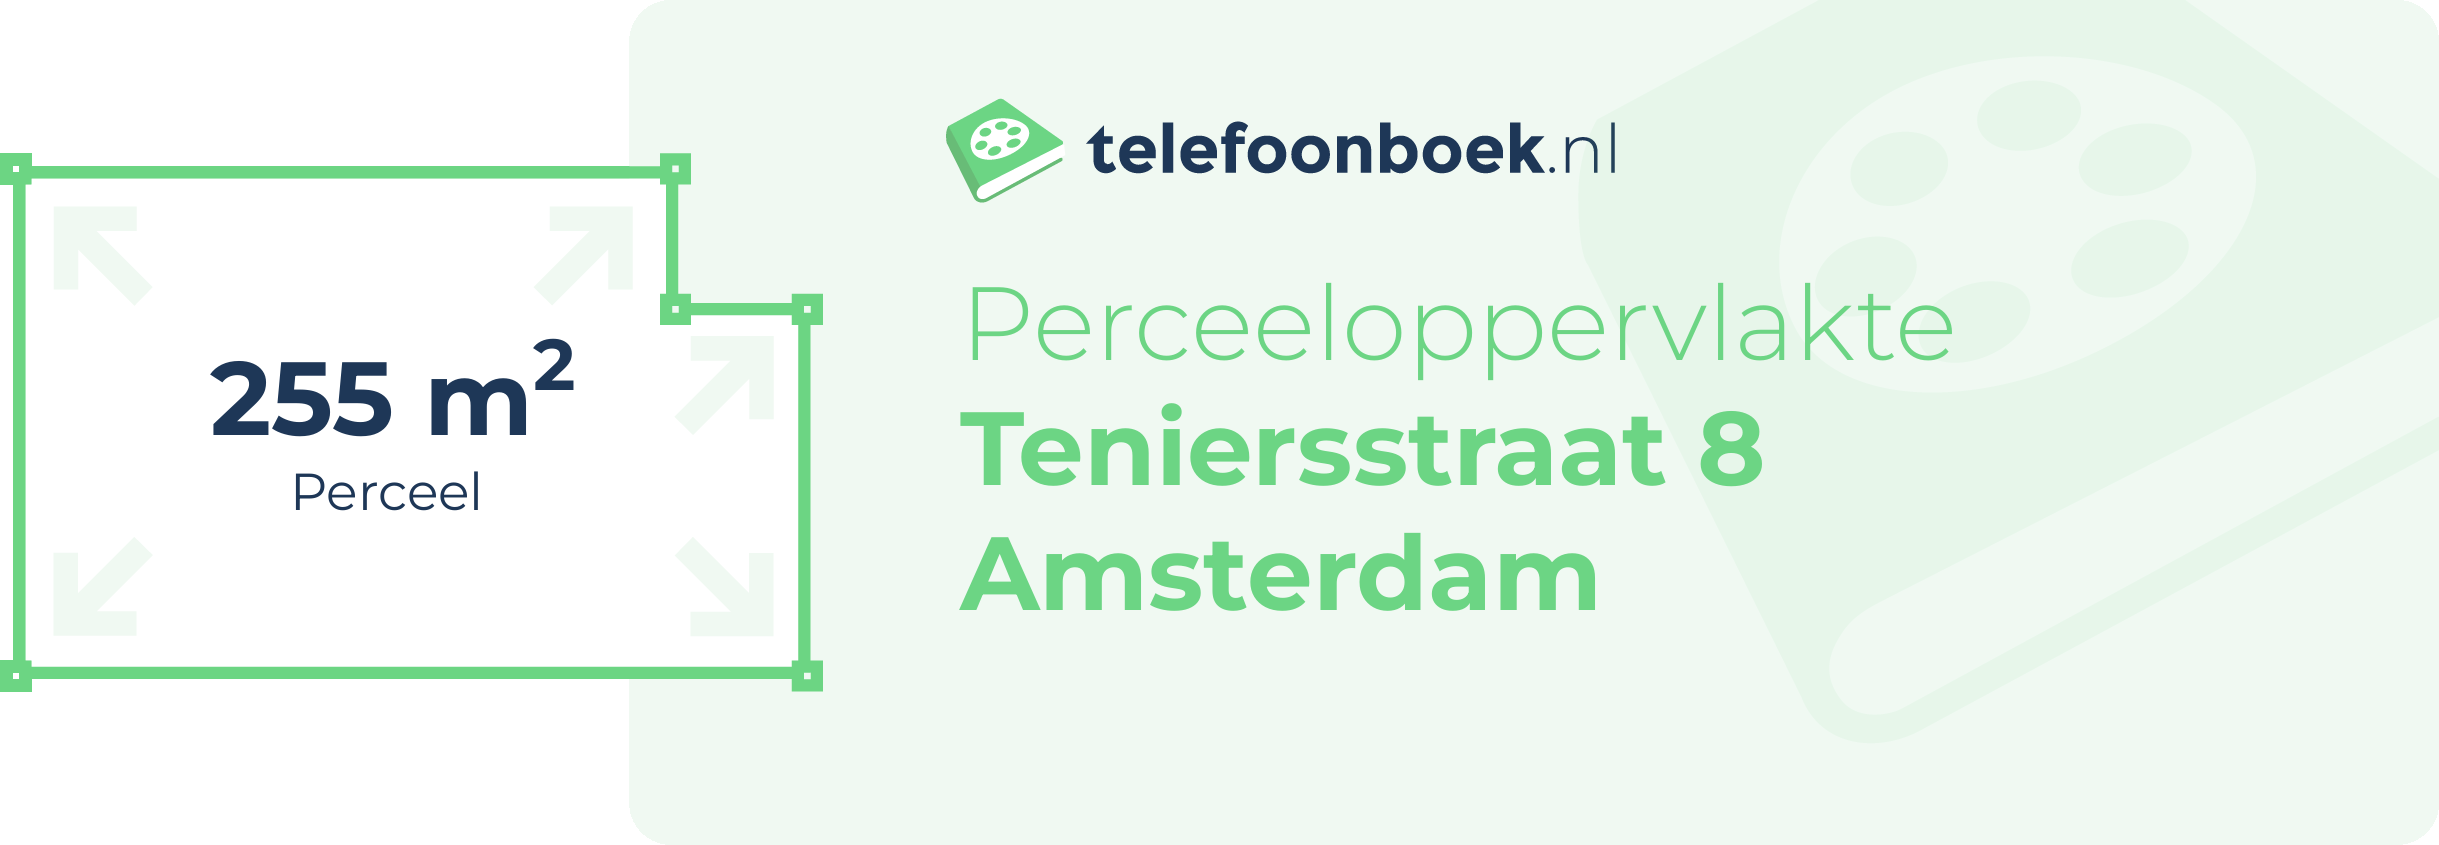 Perceeloppervlakte Teniersstraat 8 Amsterdam